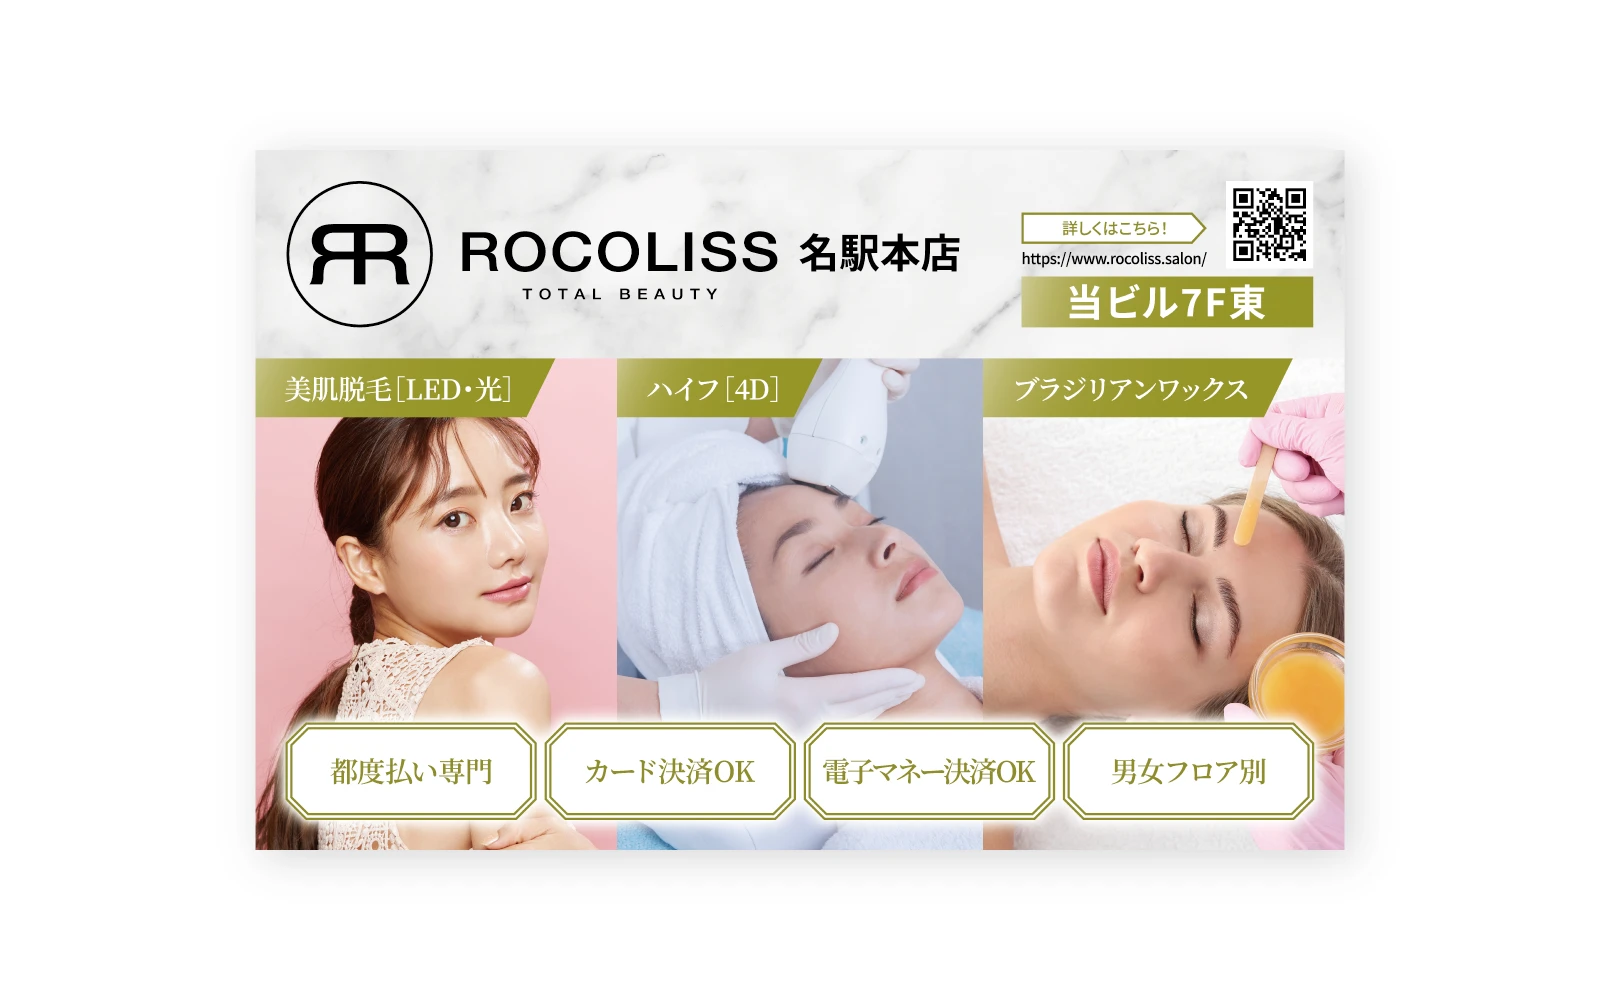 ROCOLISS TOTAL BEAUTY / 名駅本店看板デザイン